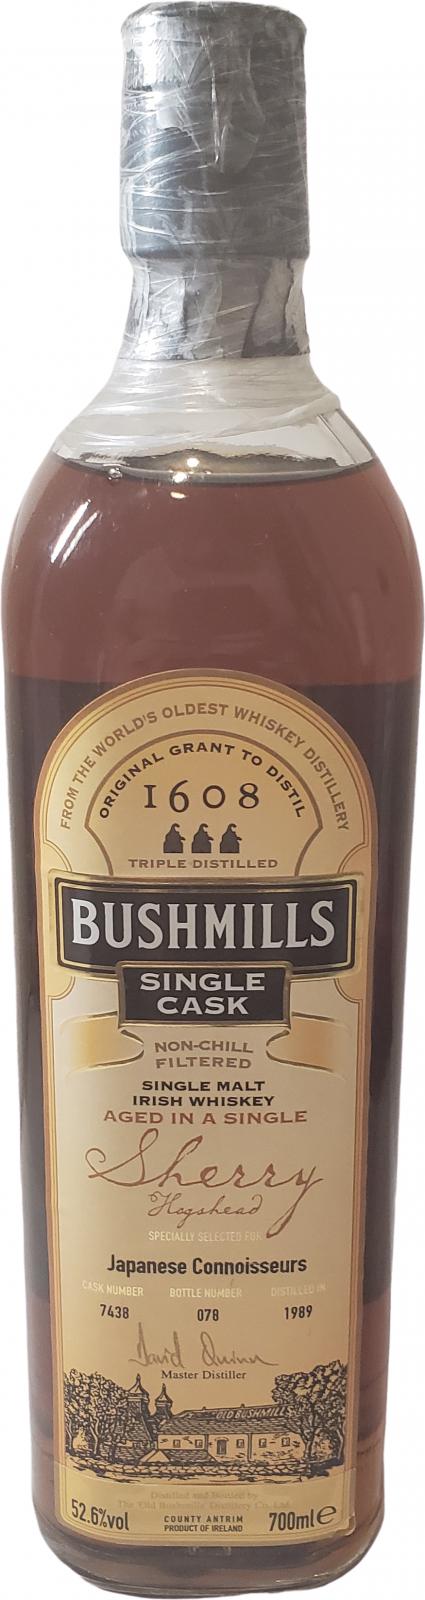 Bushmills 1989 Single Cask Sherry Hogshead #7438 Japanese Connoisseures 52.6% 700ml